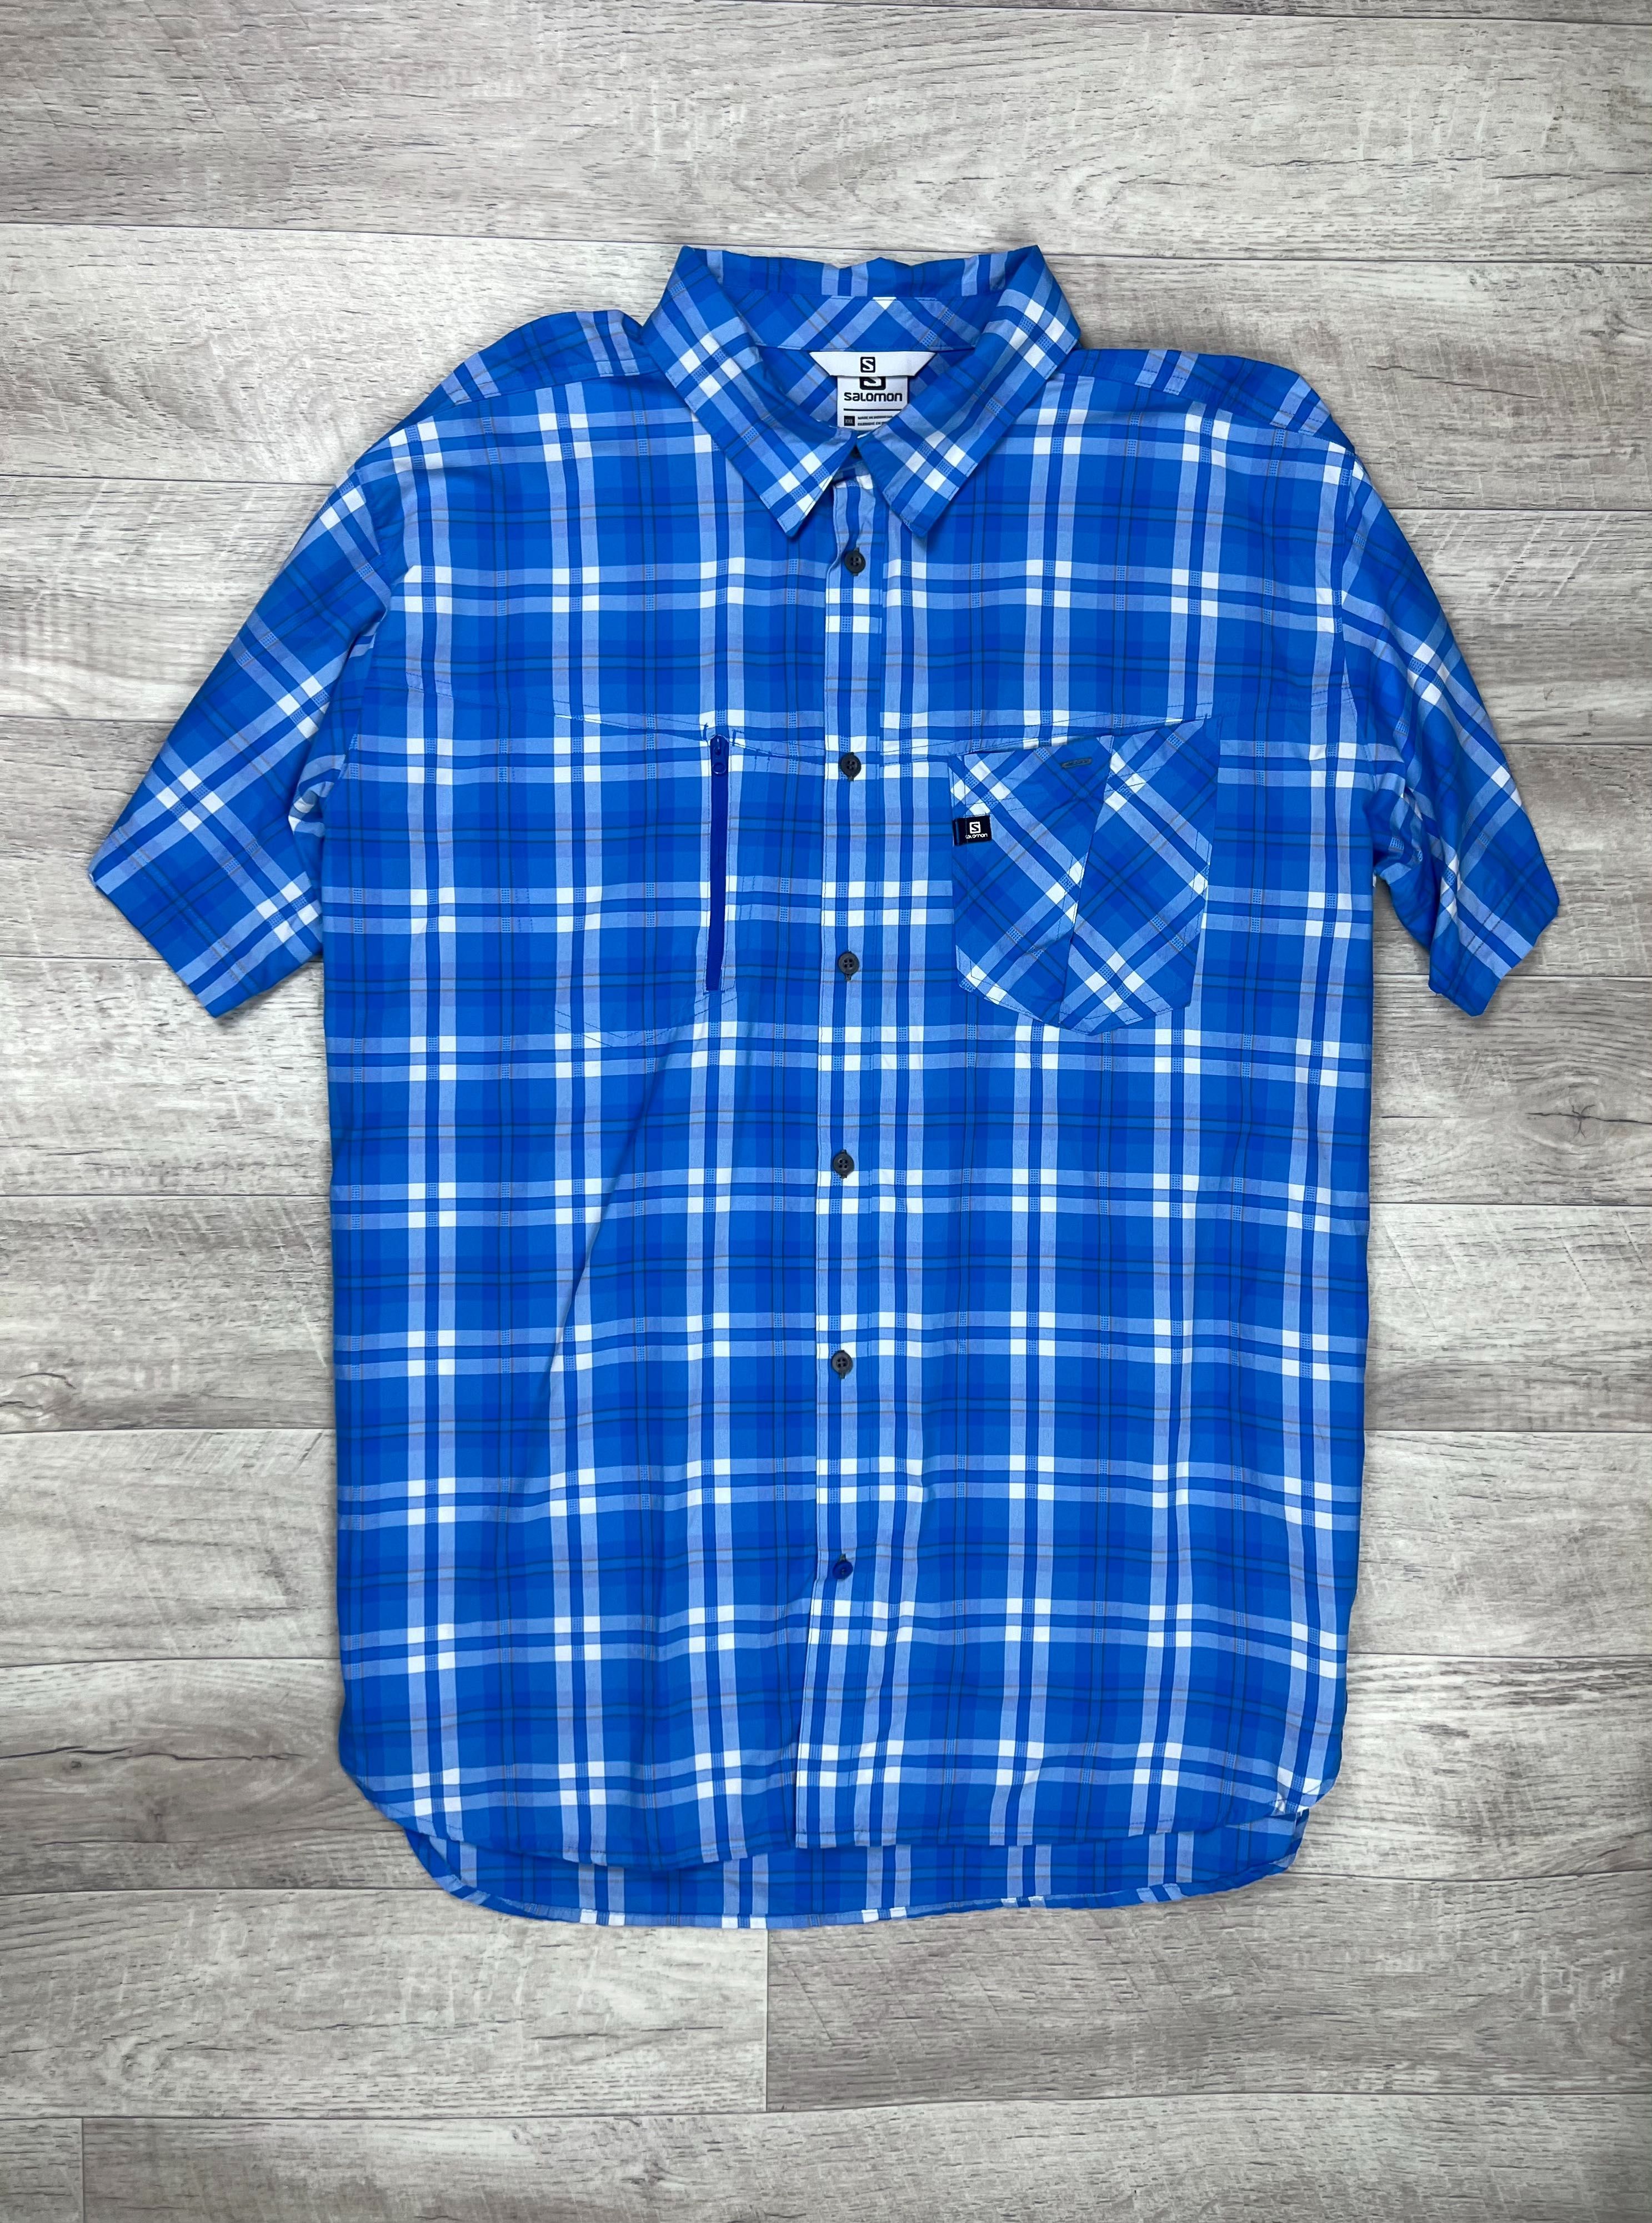 Salomon рубашка 2xl размер с коротким рукавом клетчатая синяя оригинал